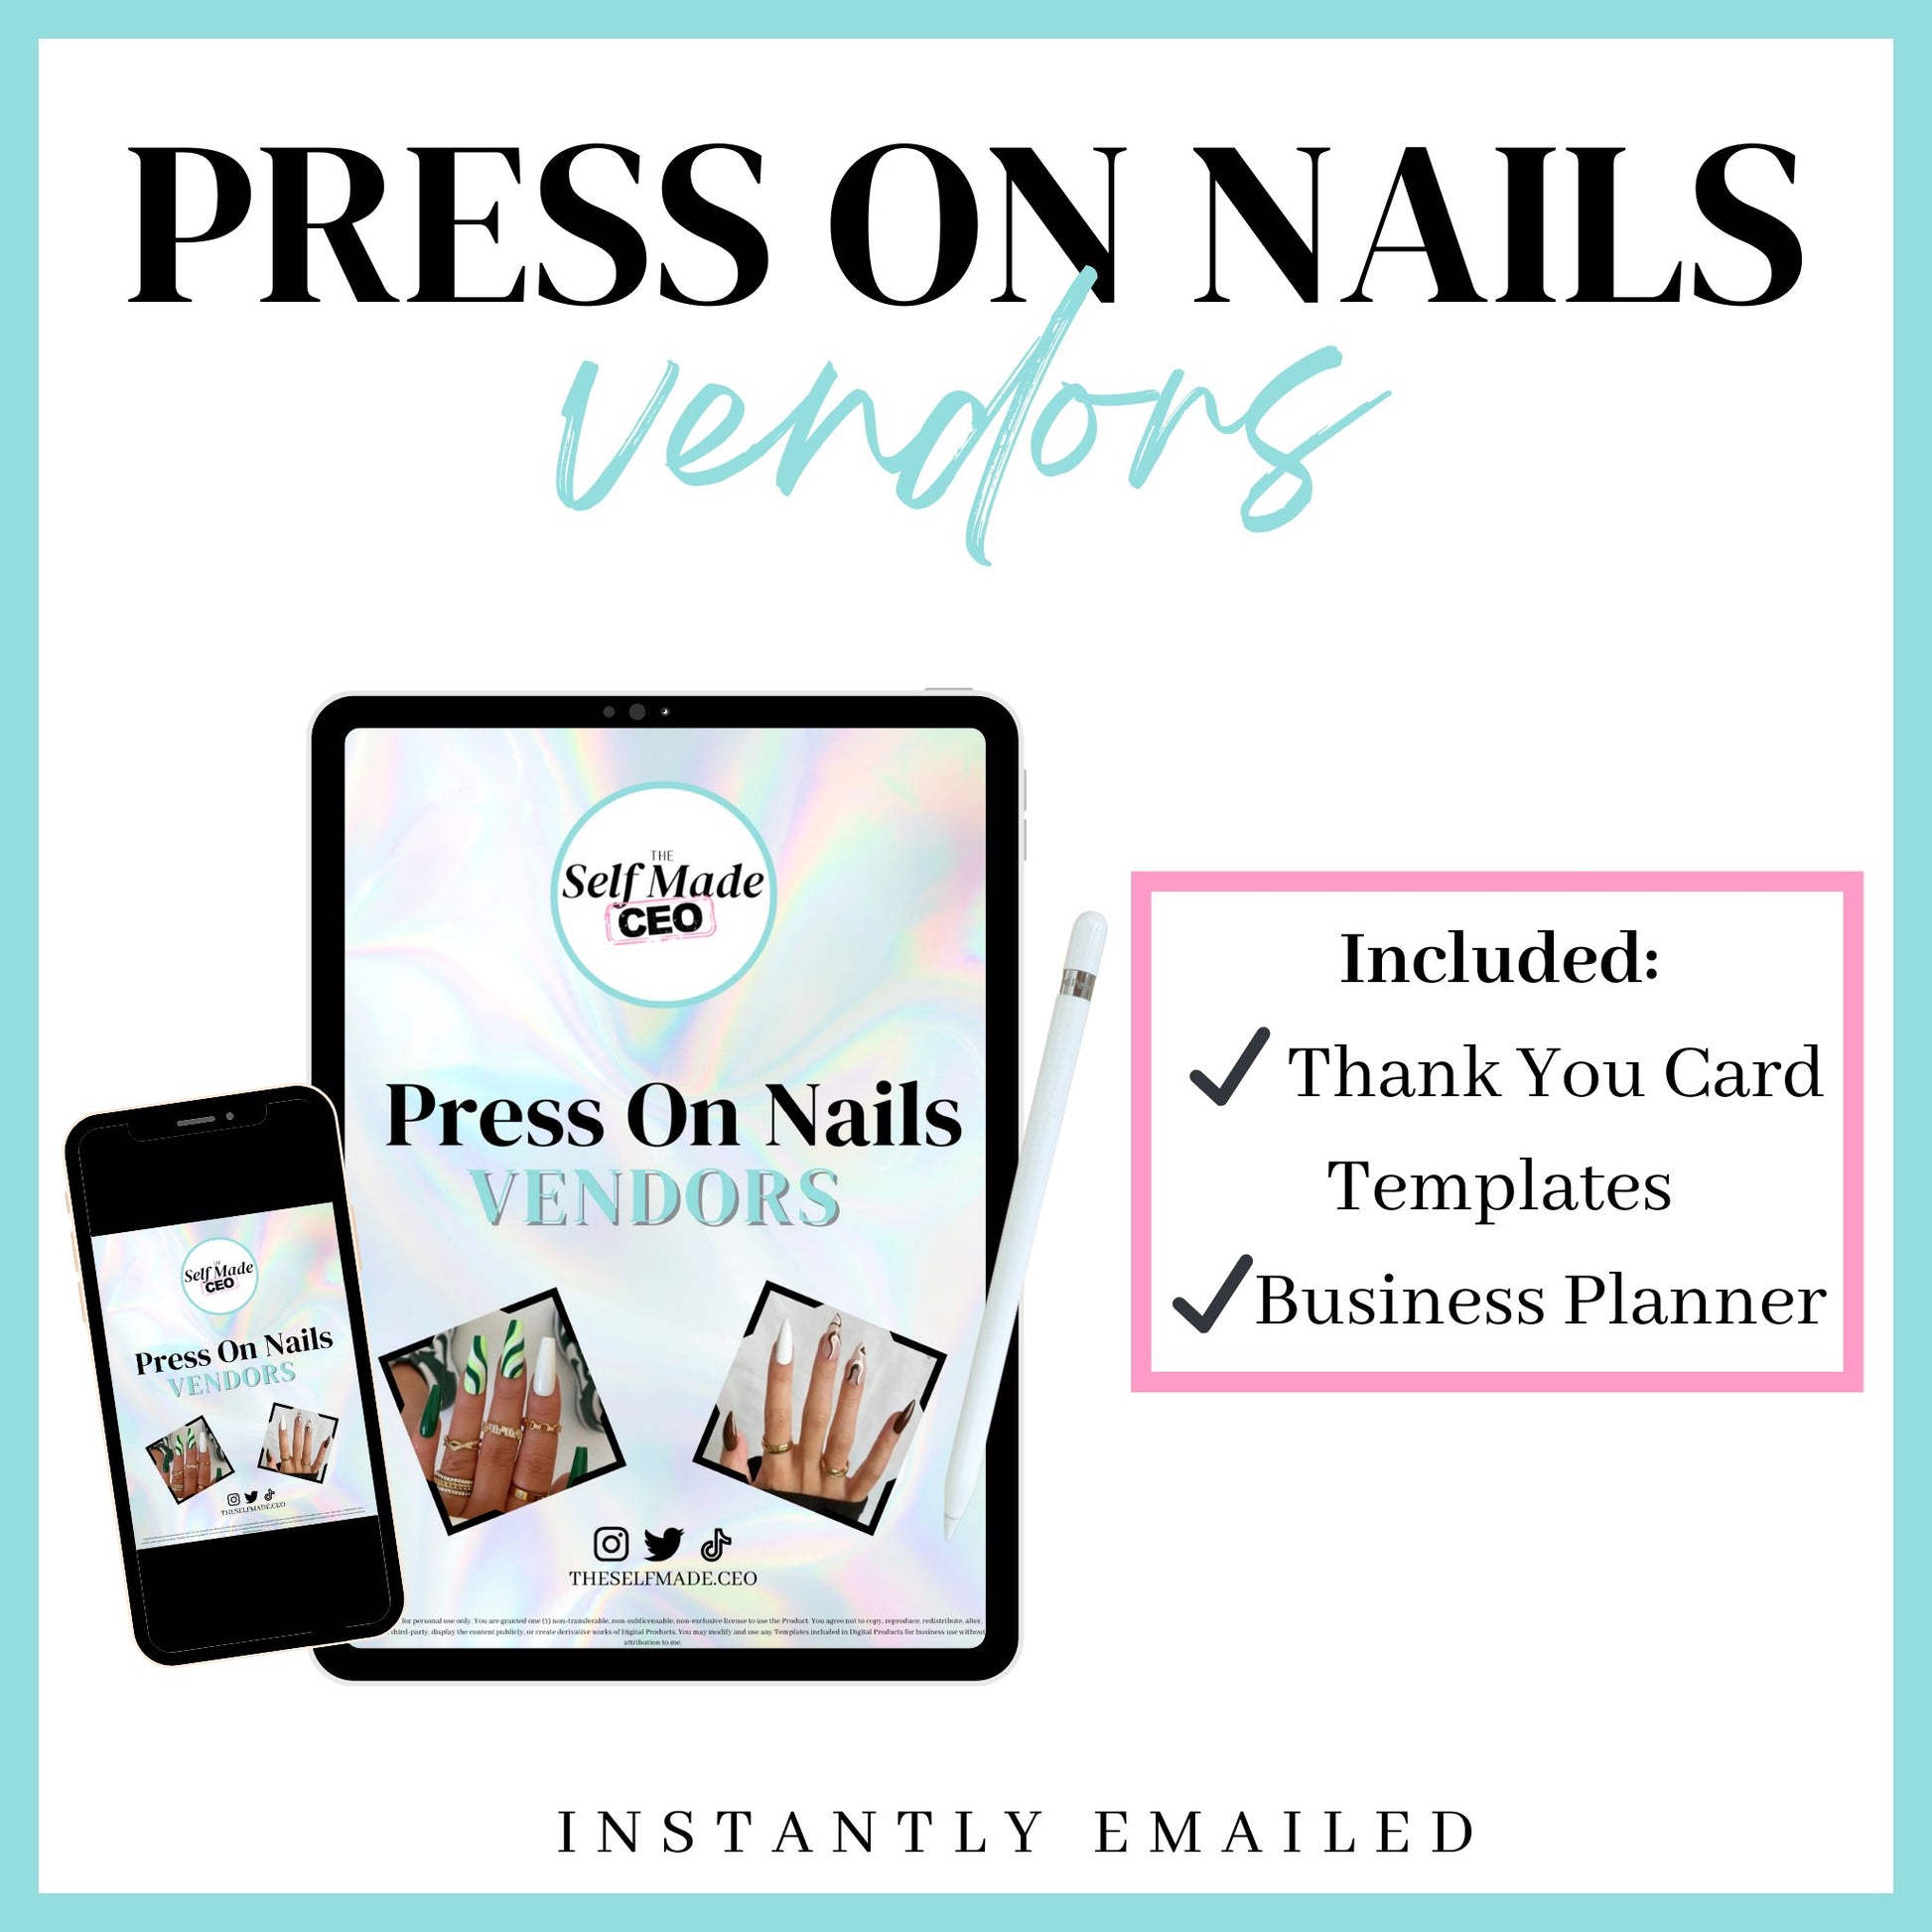 Press On Nails Vendors - The Self Made CEO - press on nails vendors